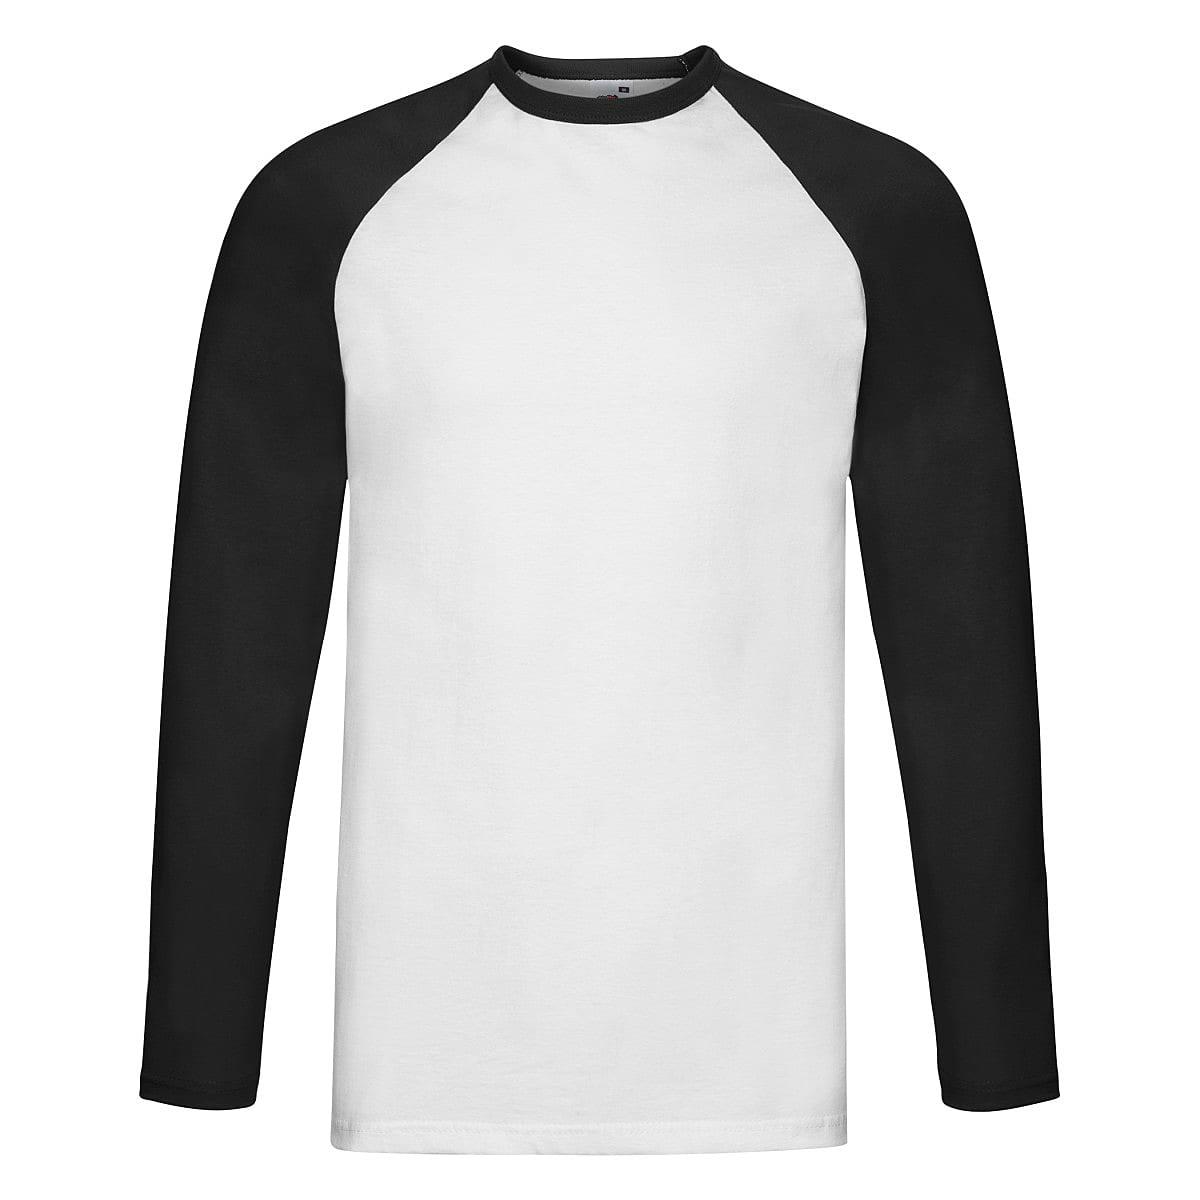 Fruit Of The Loom Long-Sleeve Baseball T-Shirt in White / Black (Product Code: 61028)